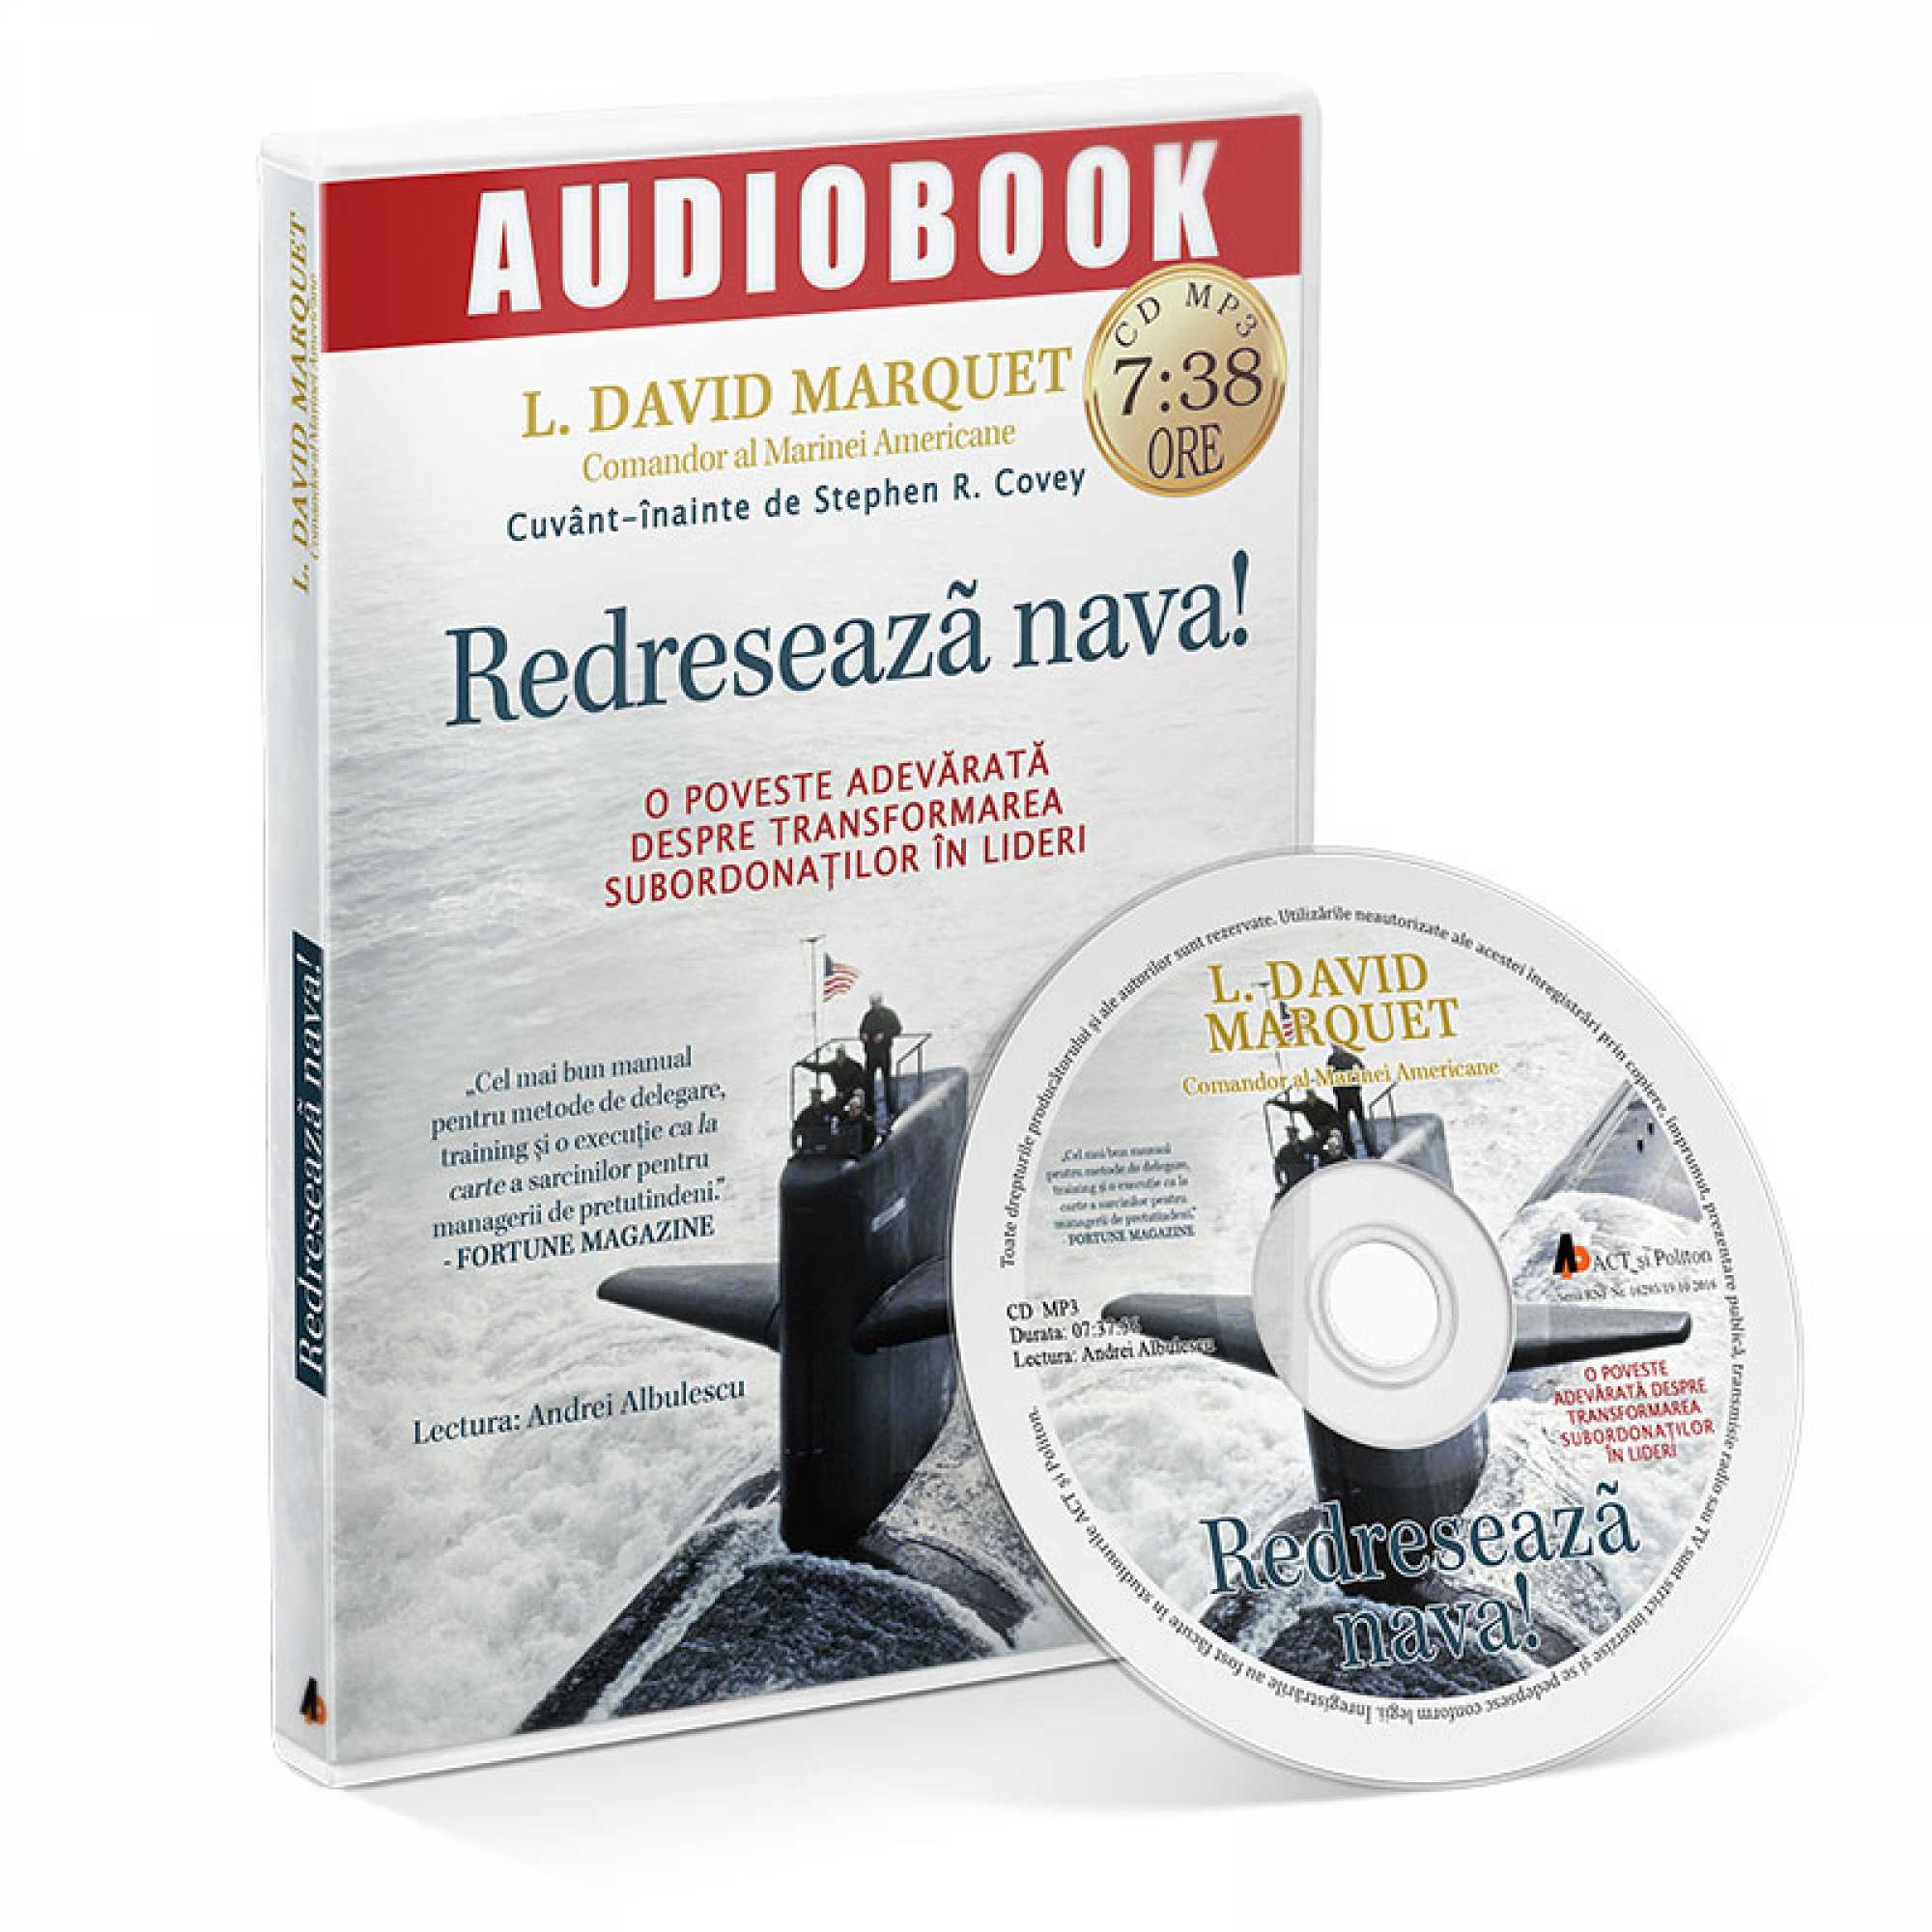 Redreseaza Nava! – Audiobook | L. David Marquet carturesti.ro poza bestsellers.ro